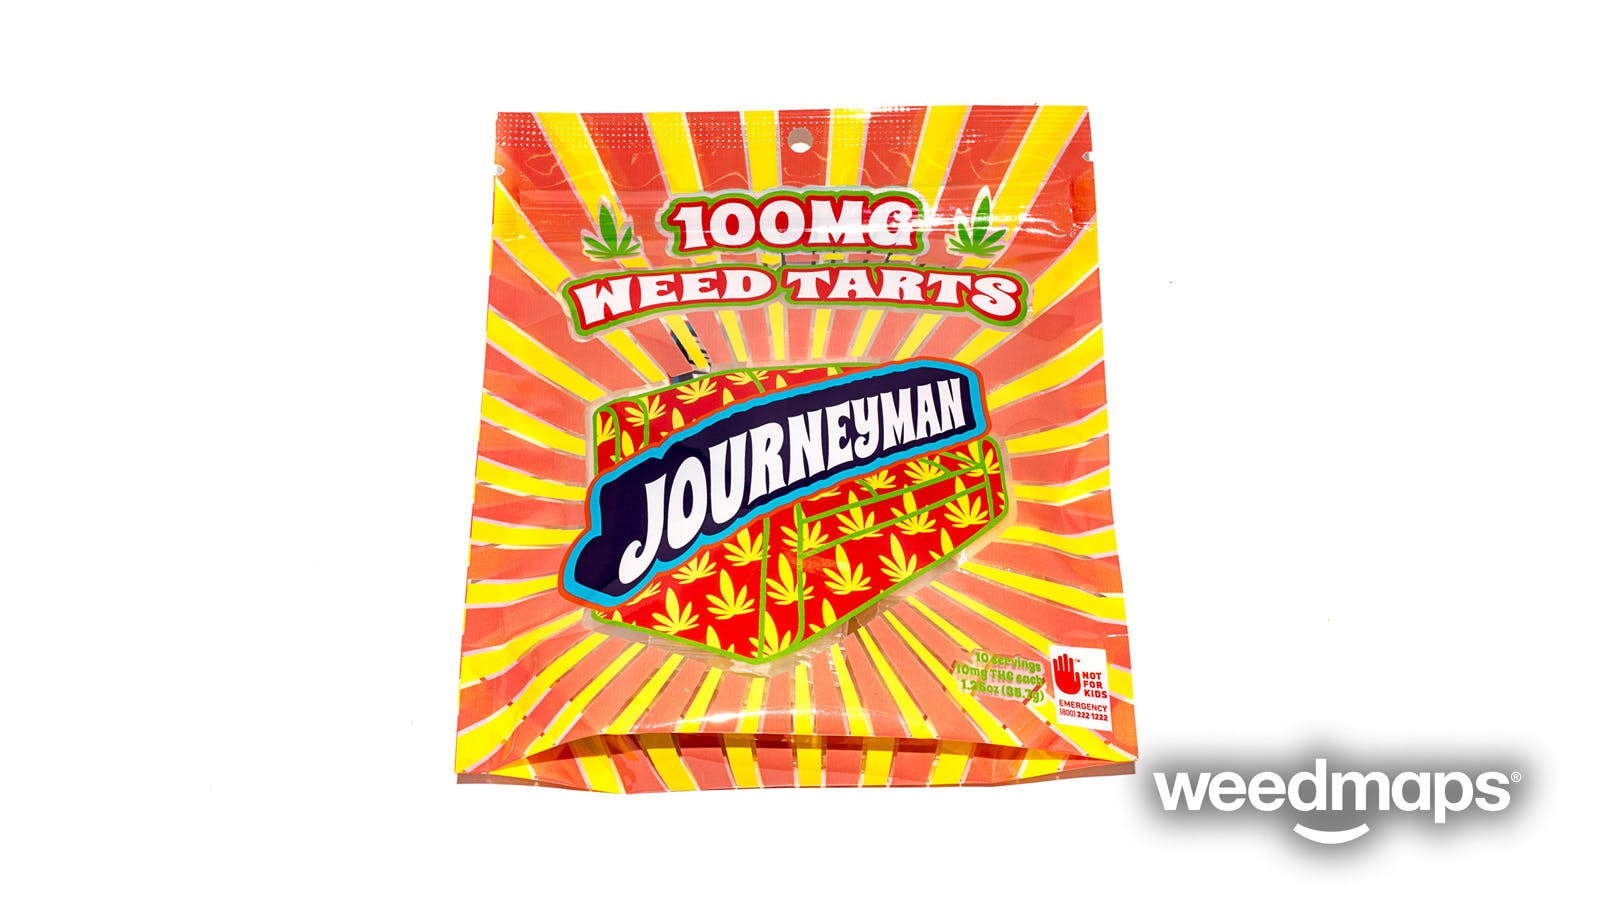 Journeyman - Weed Tarts